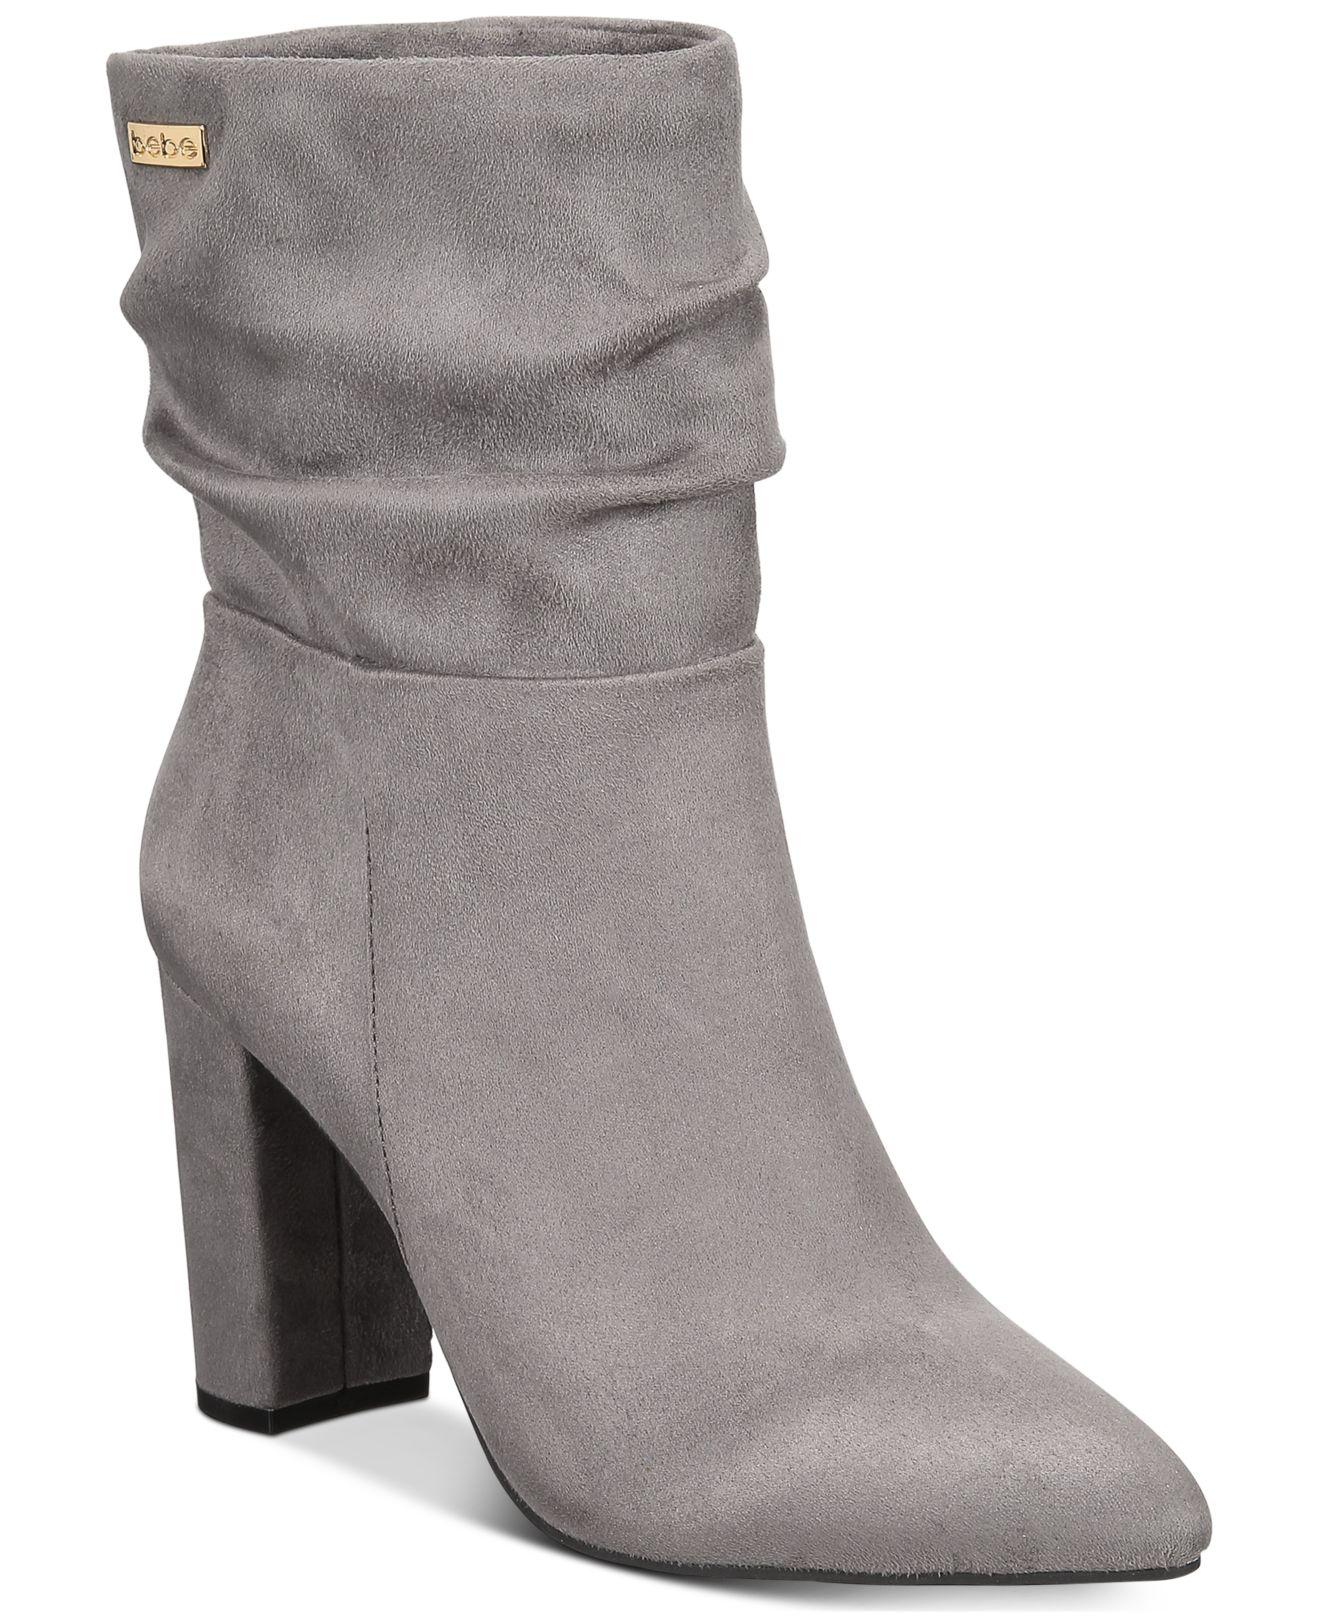 gray dress booties